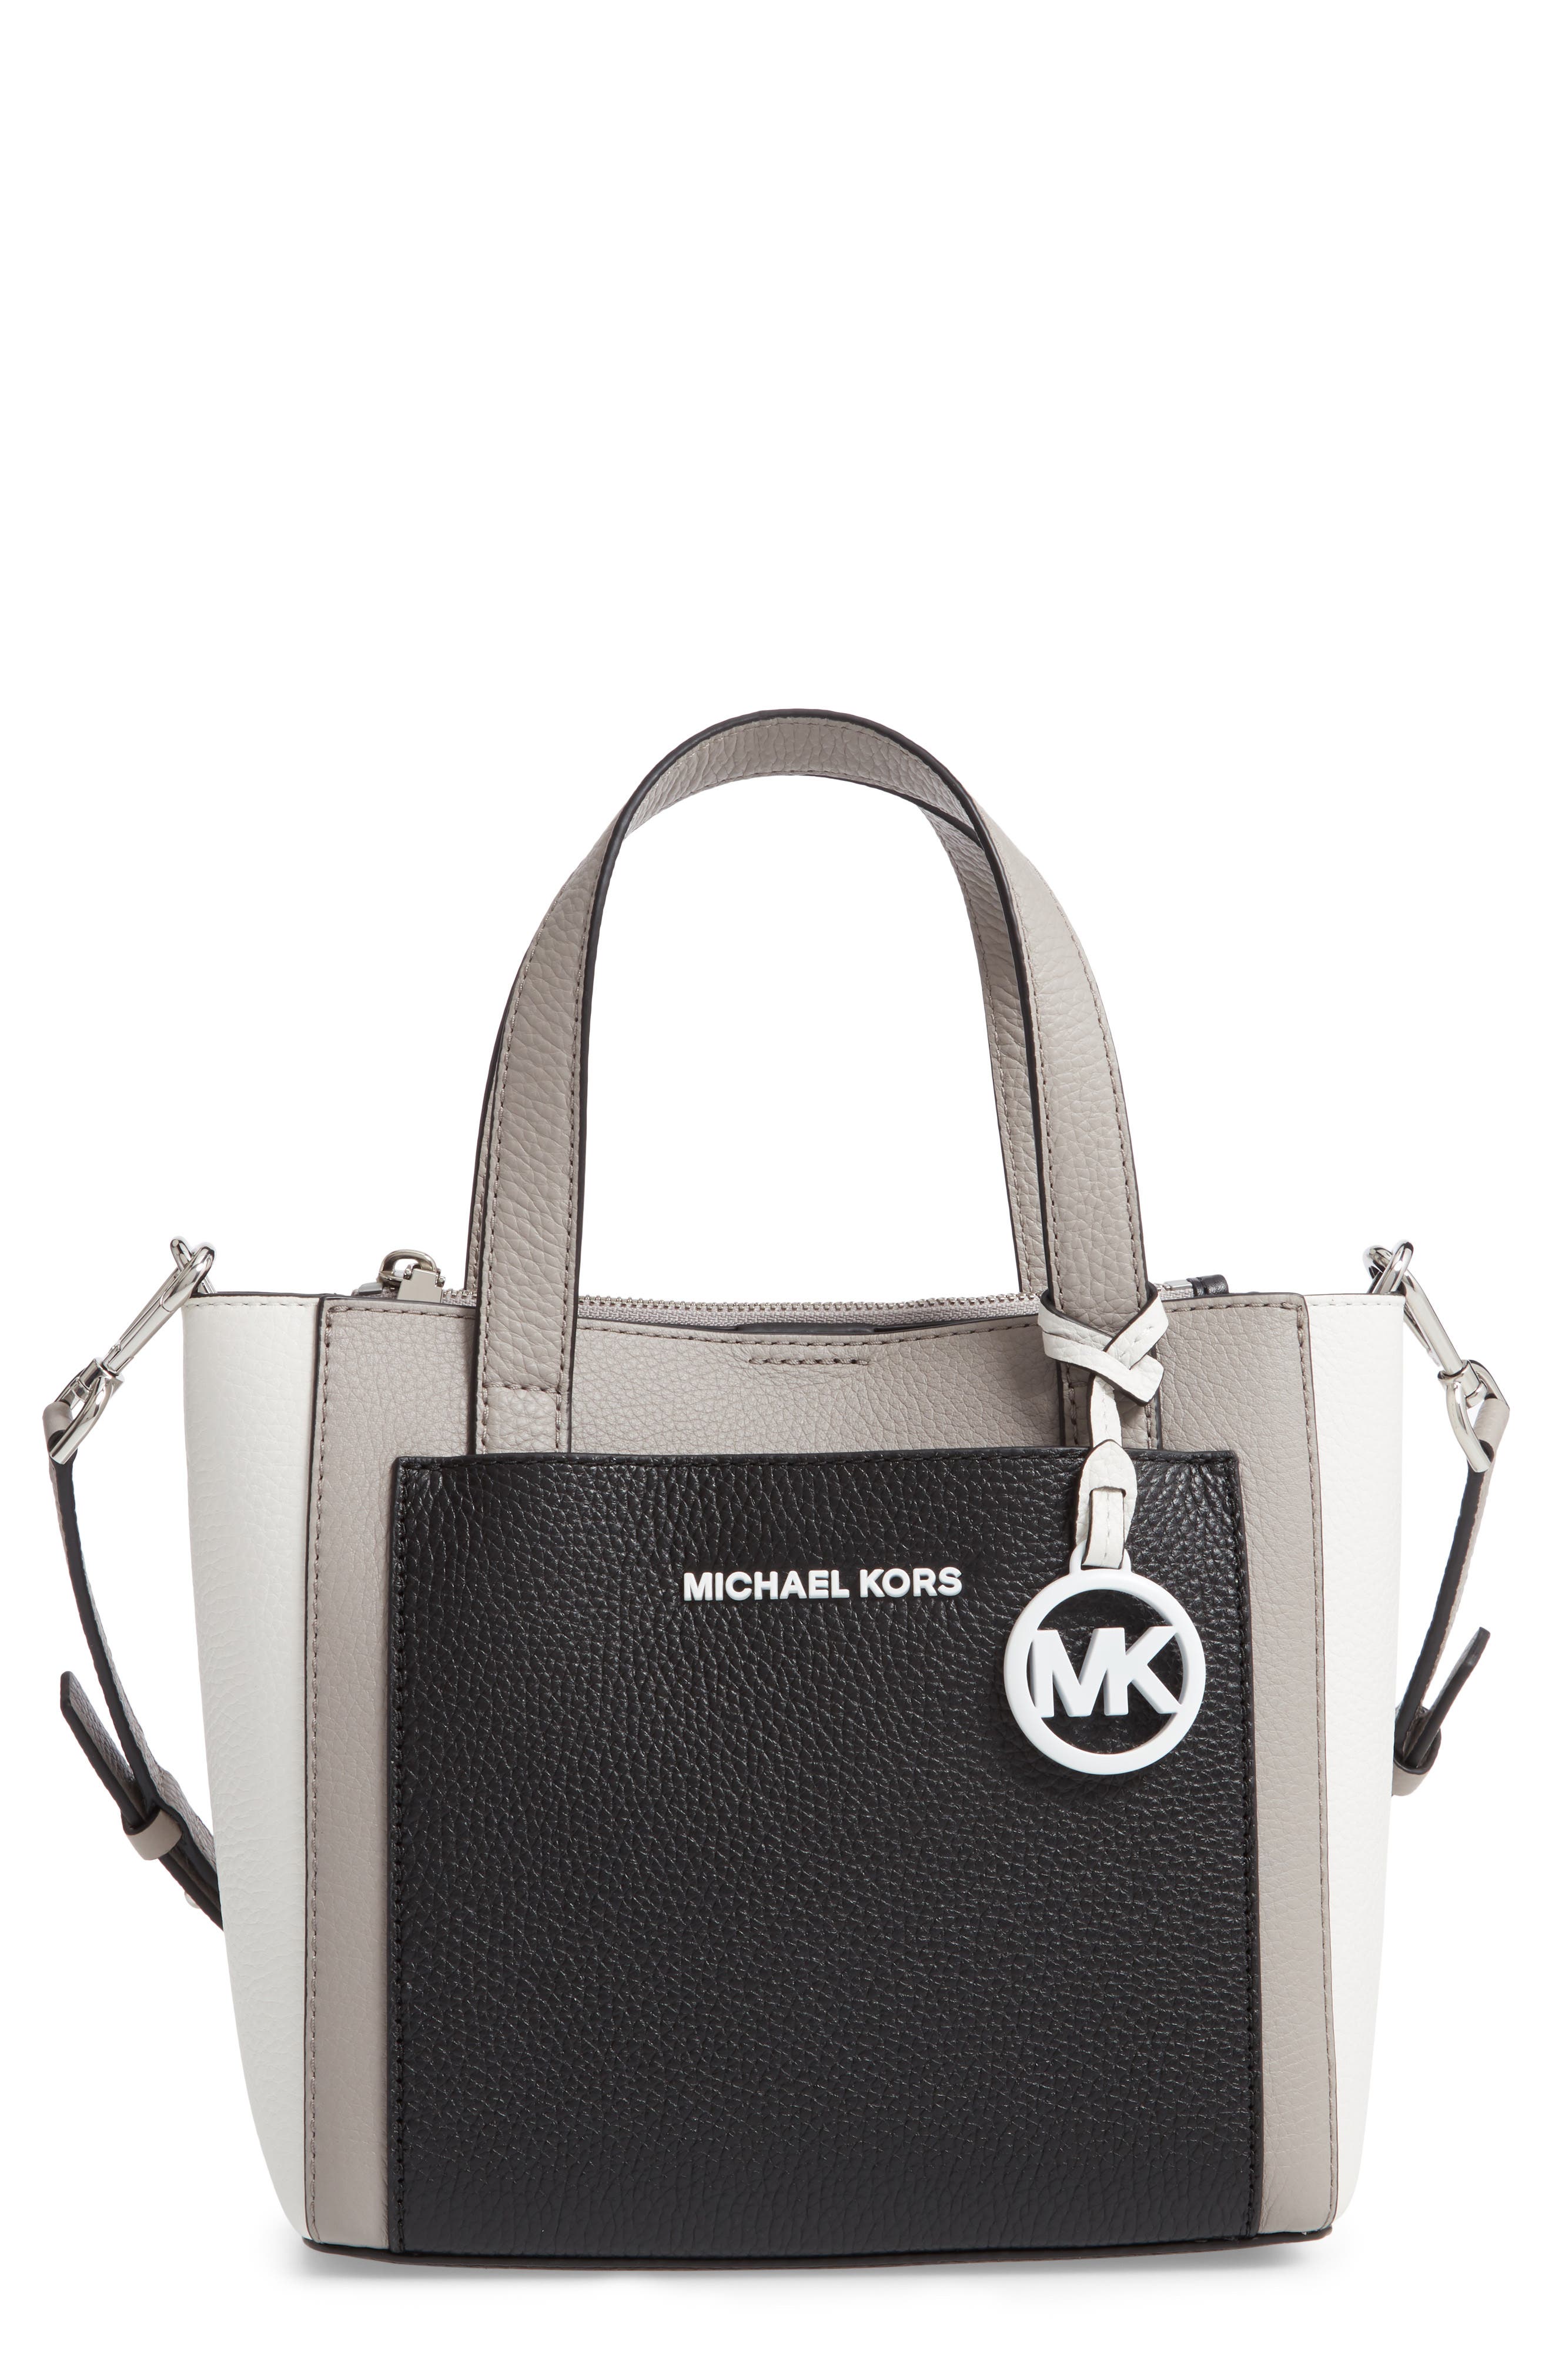 black and white mk purse